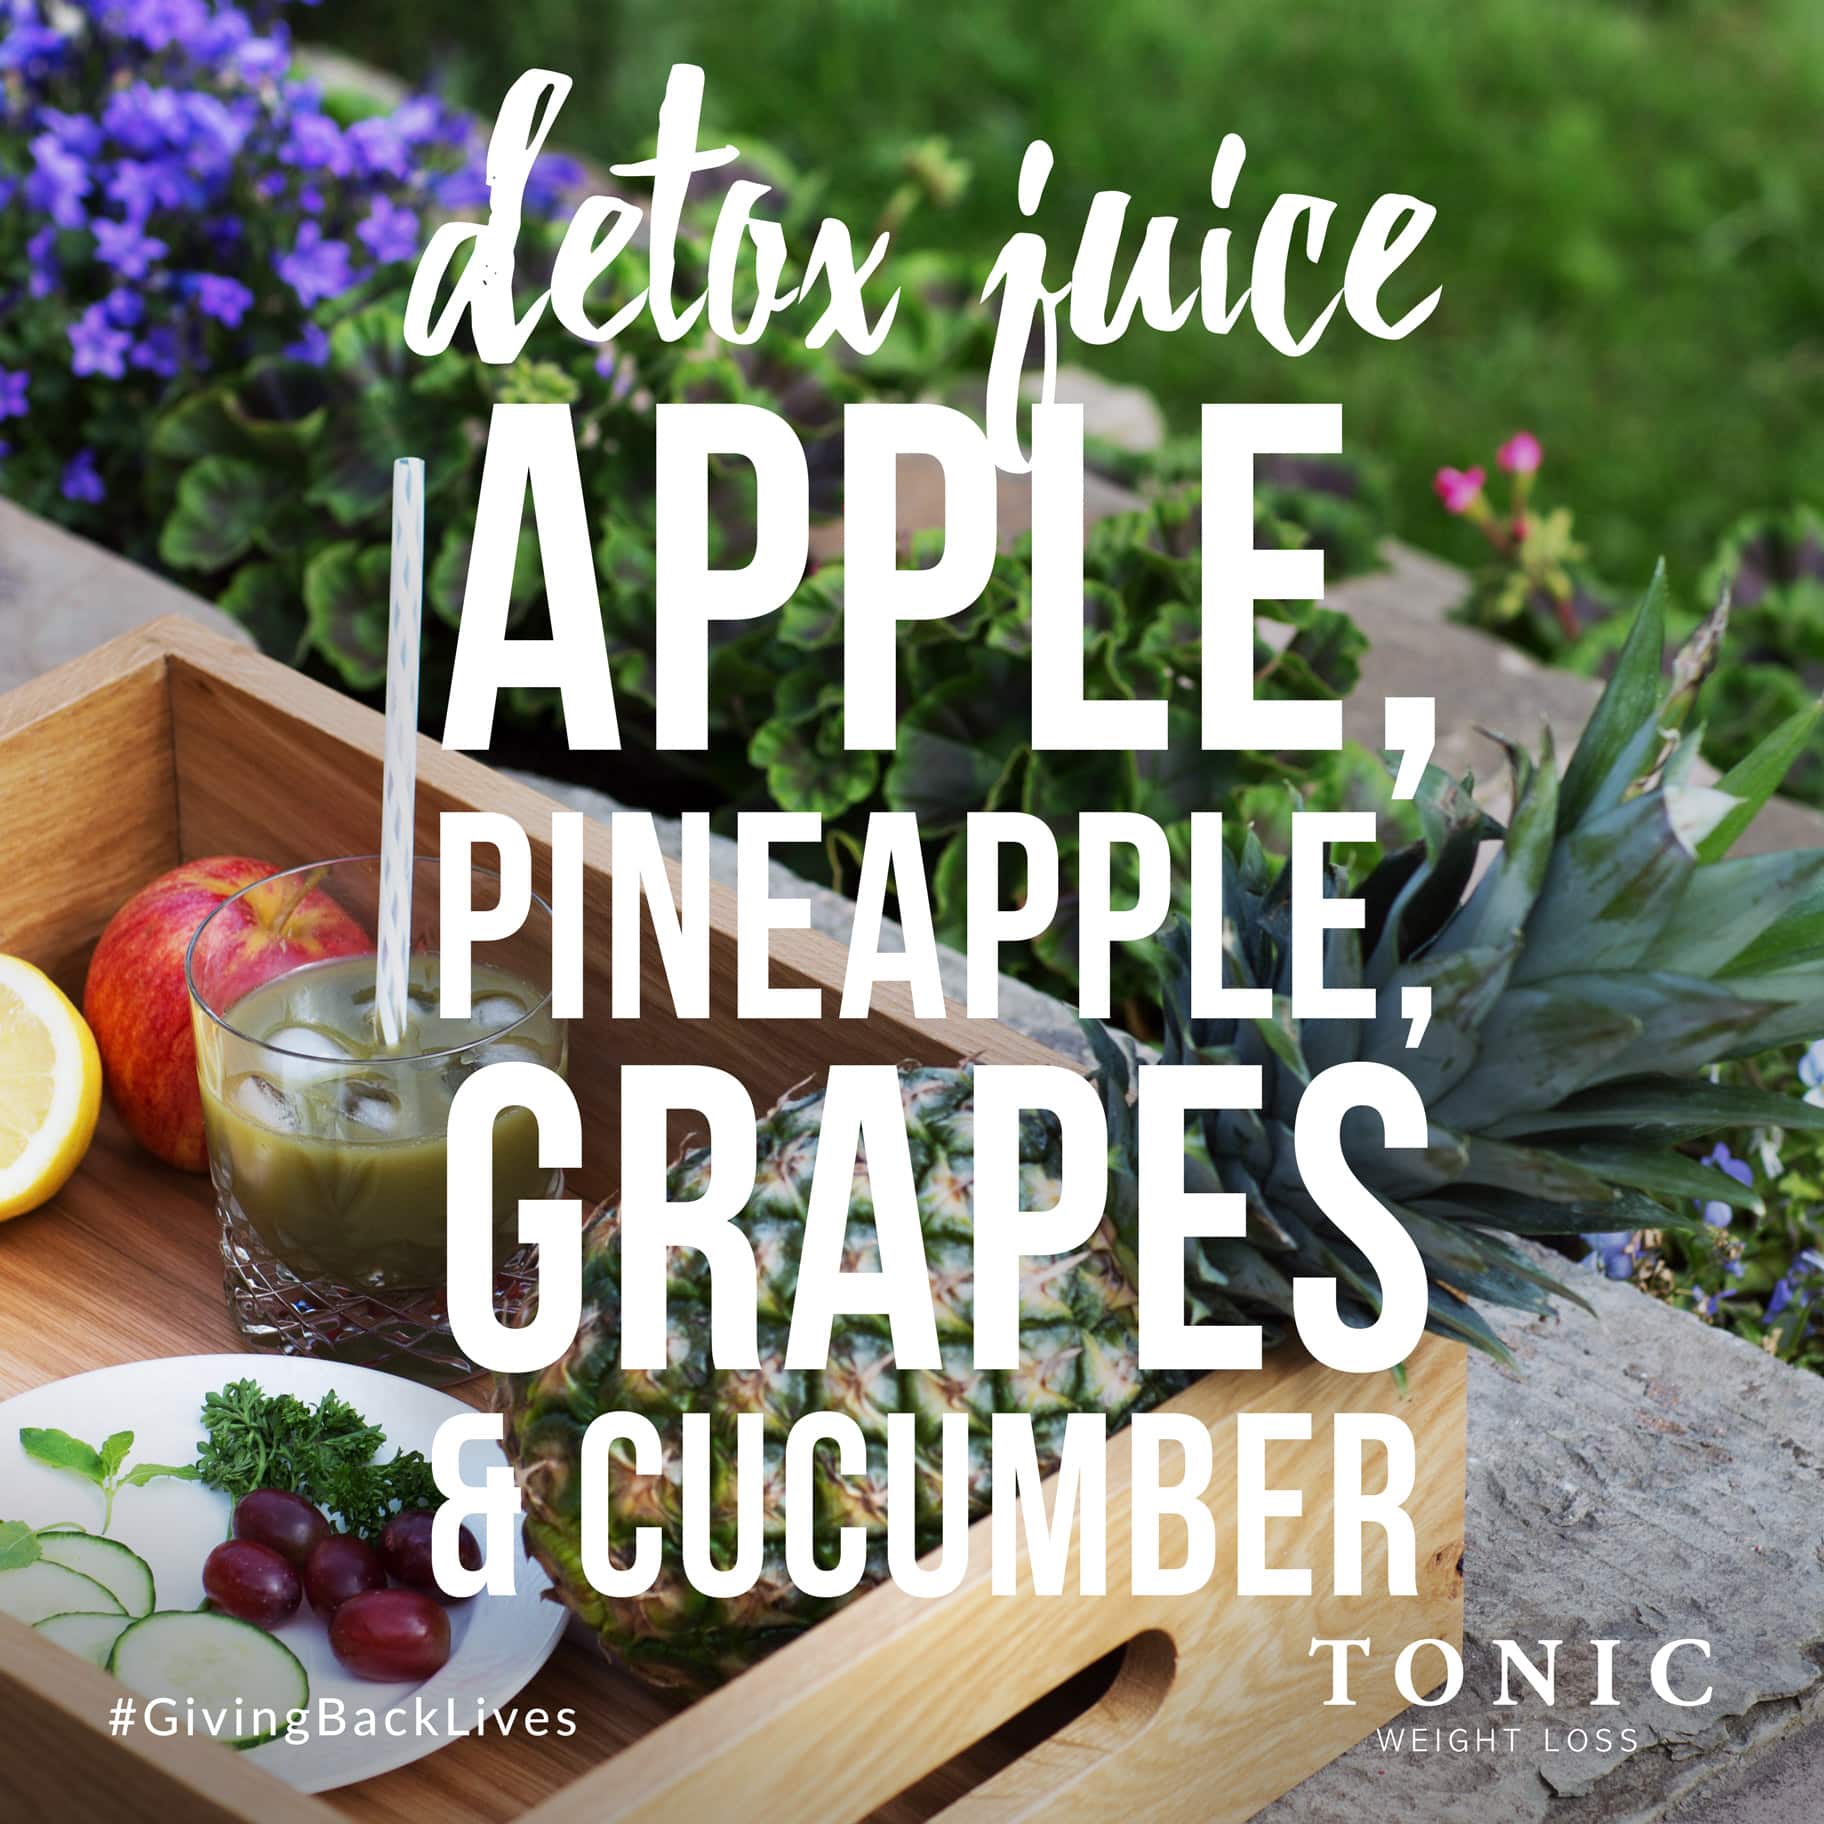 Apple-Pineapple-grapes-cucumber-Detox-juice-healthy